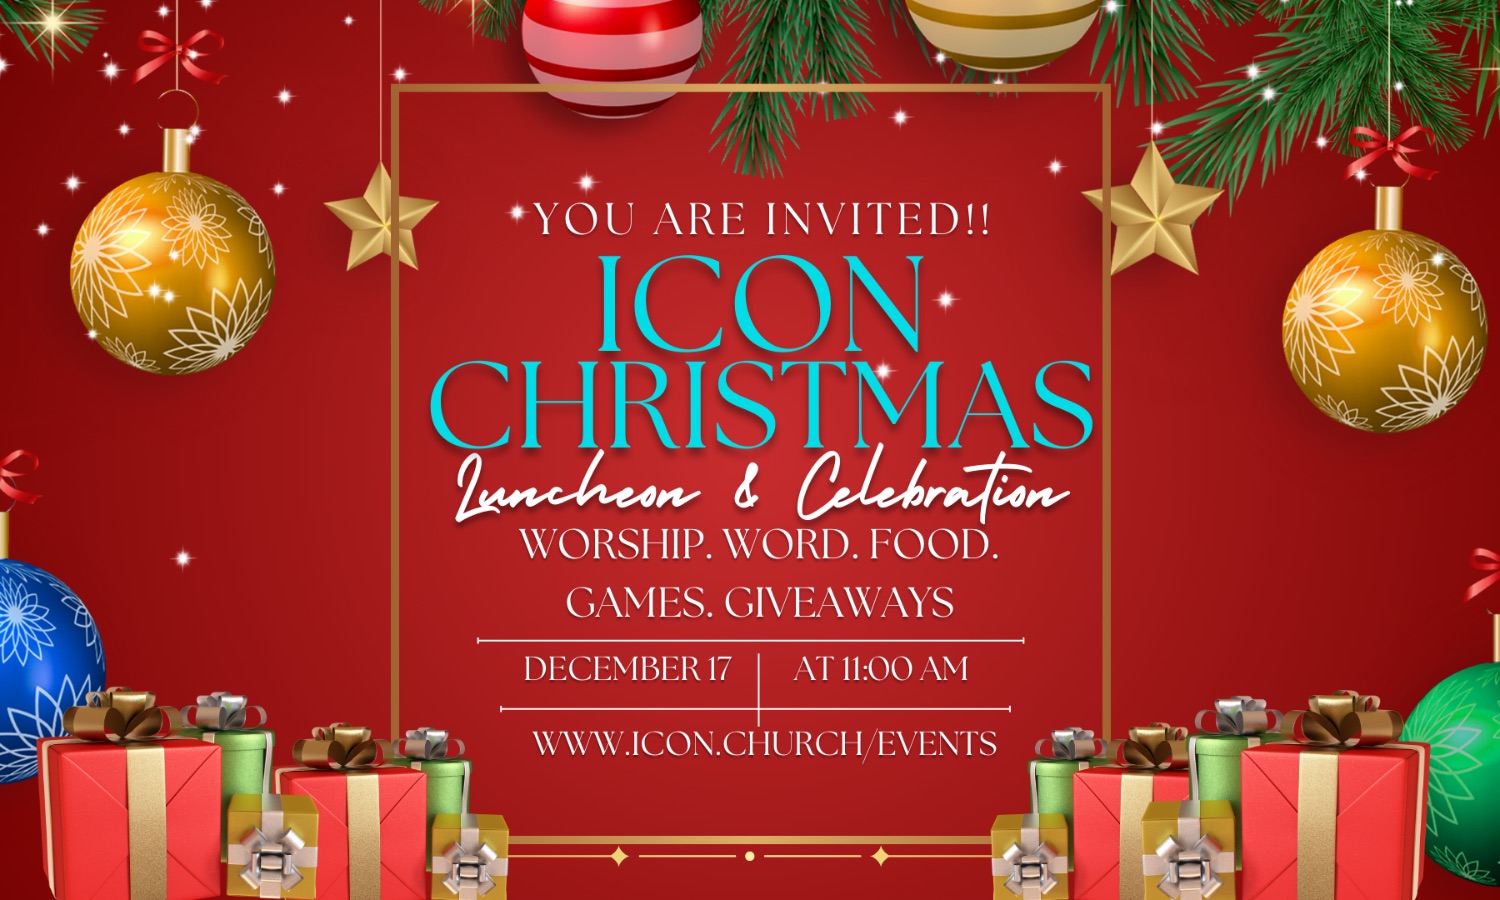 ICON Christmas Luncheon & Celebration